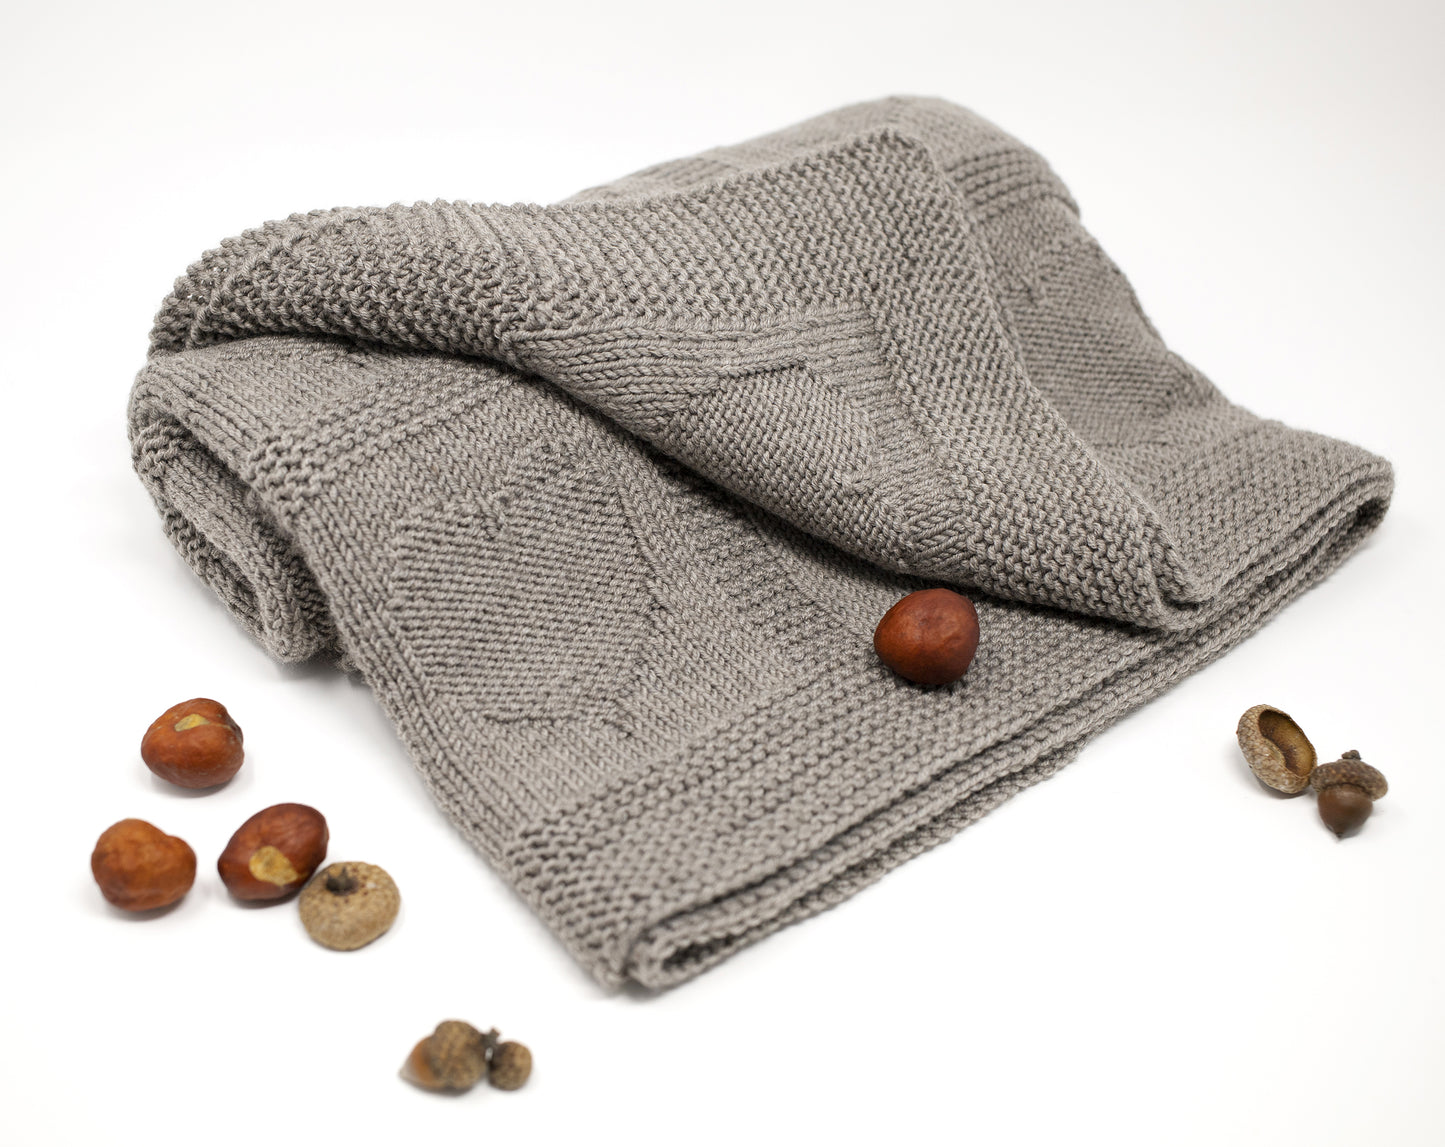 beige superwash merino wool yarn hand-knitted baby blanket in Hearts knitting pattern on a white background